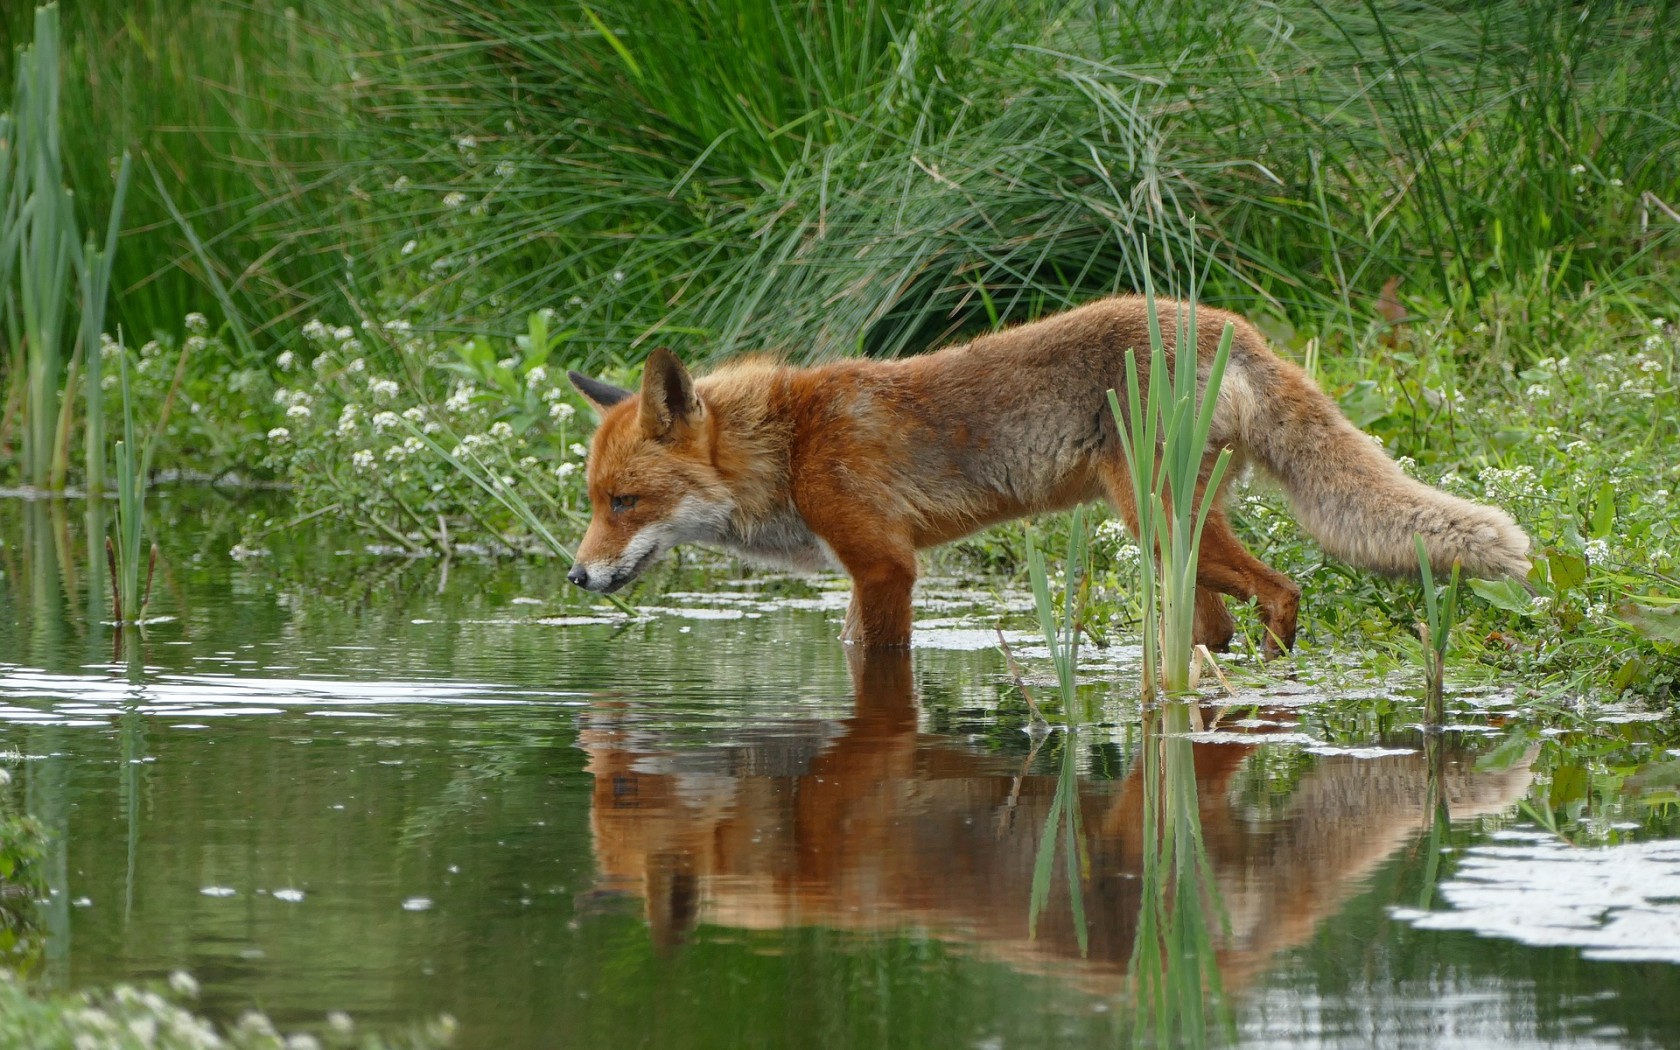 Fox in nature